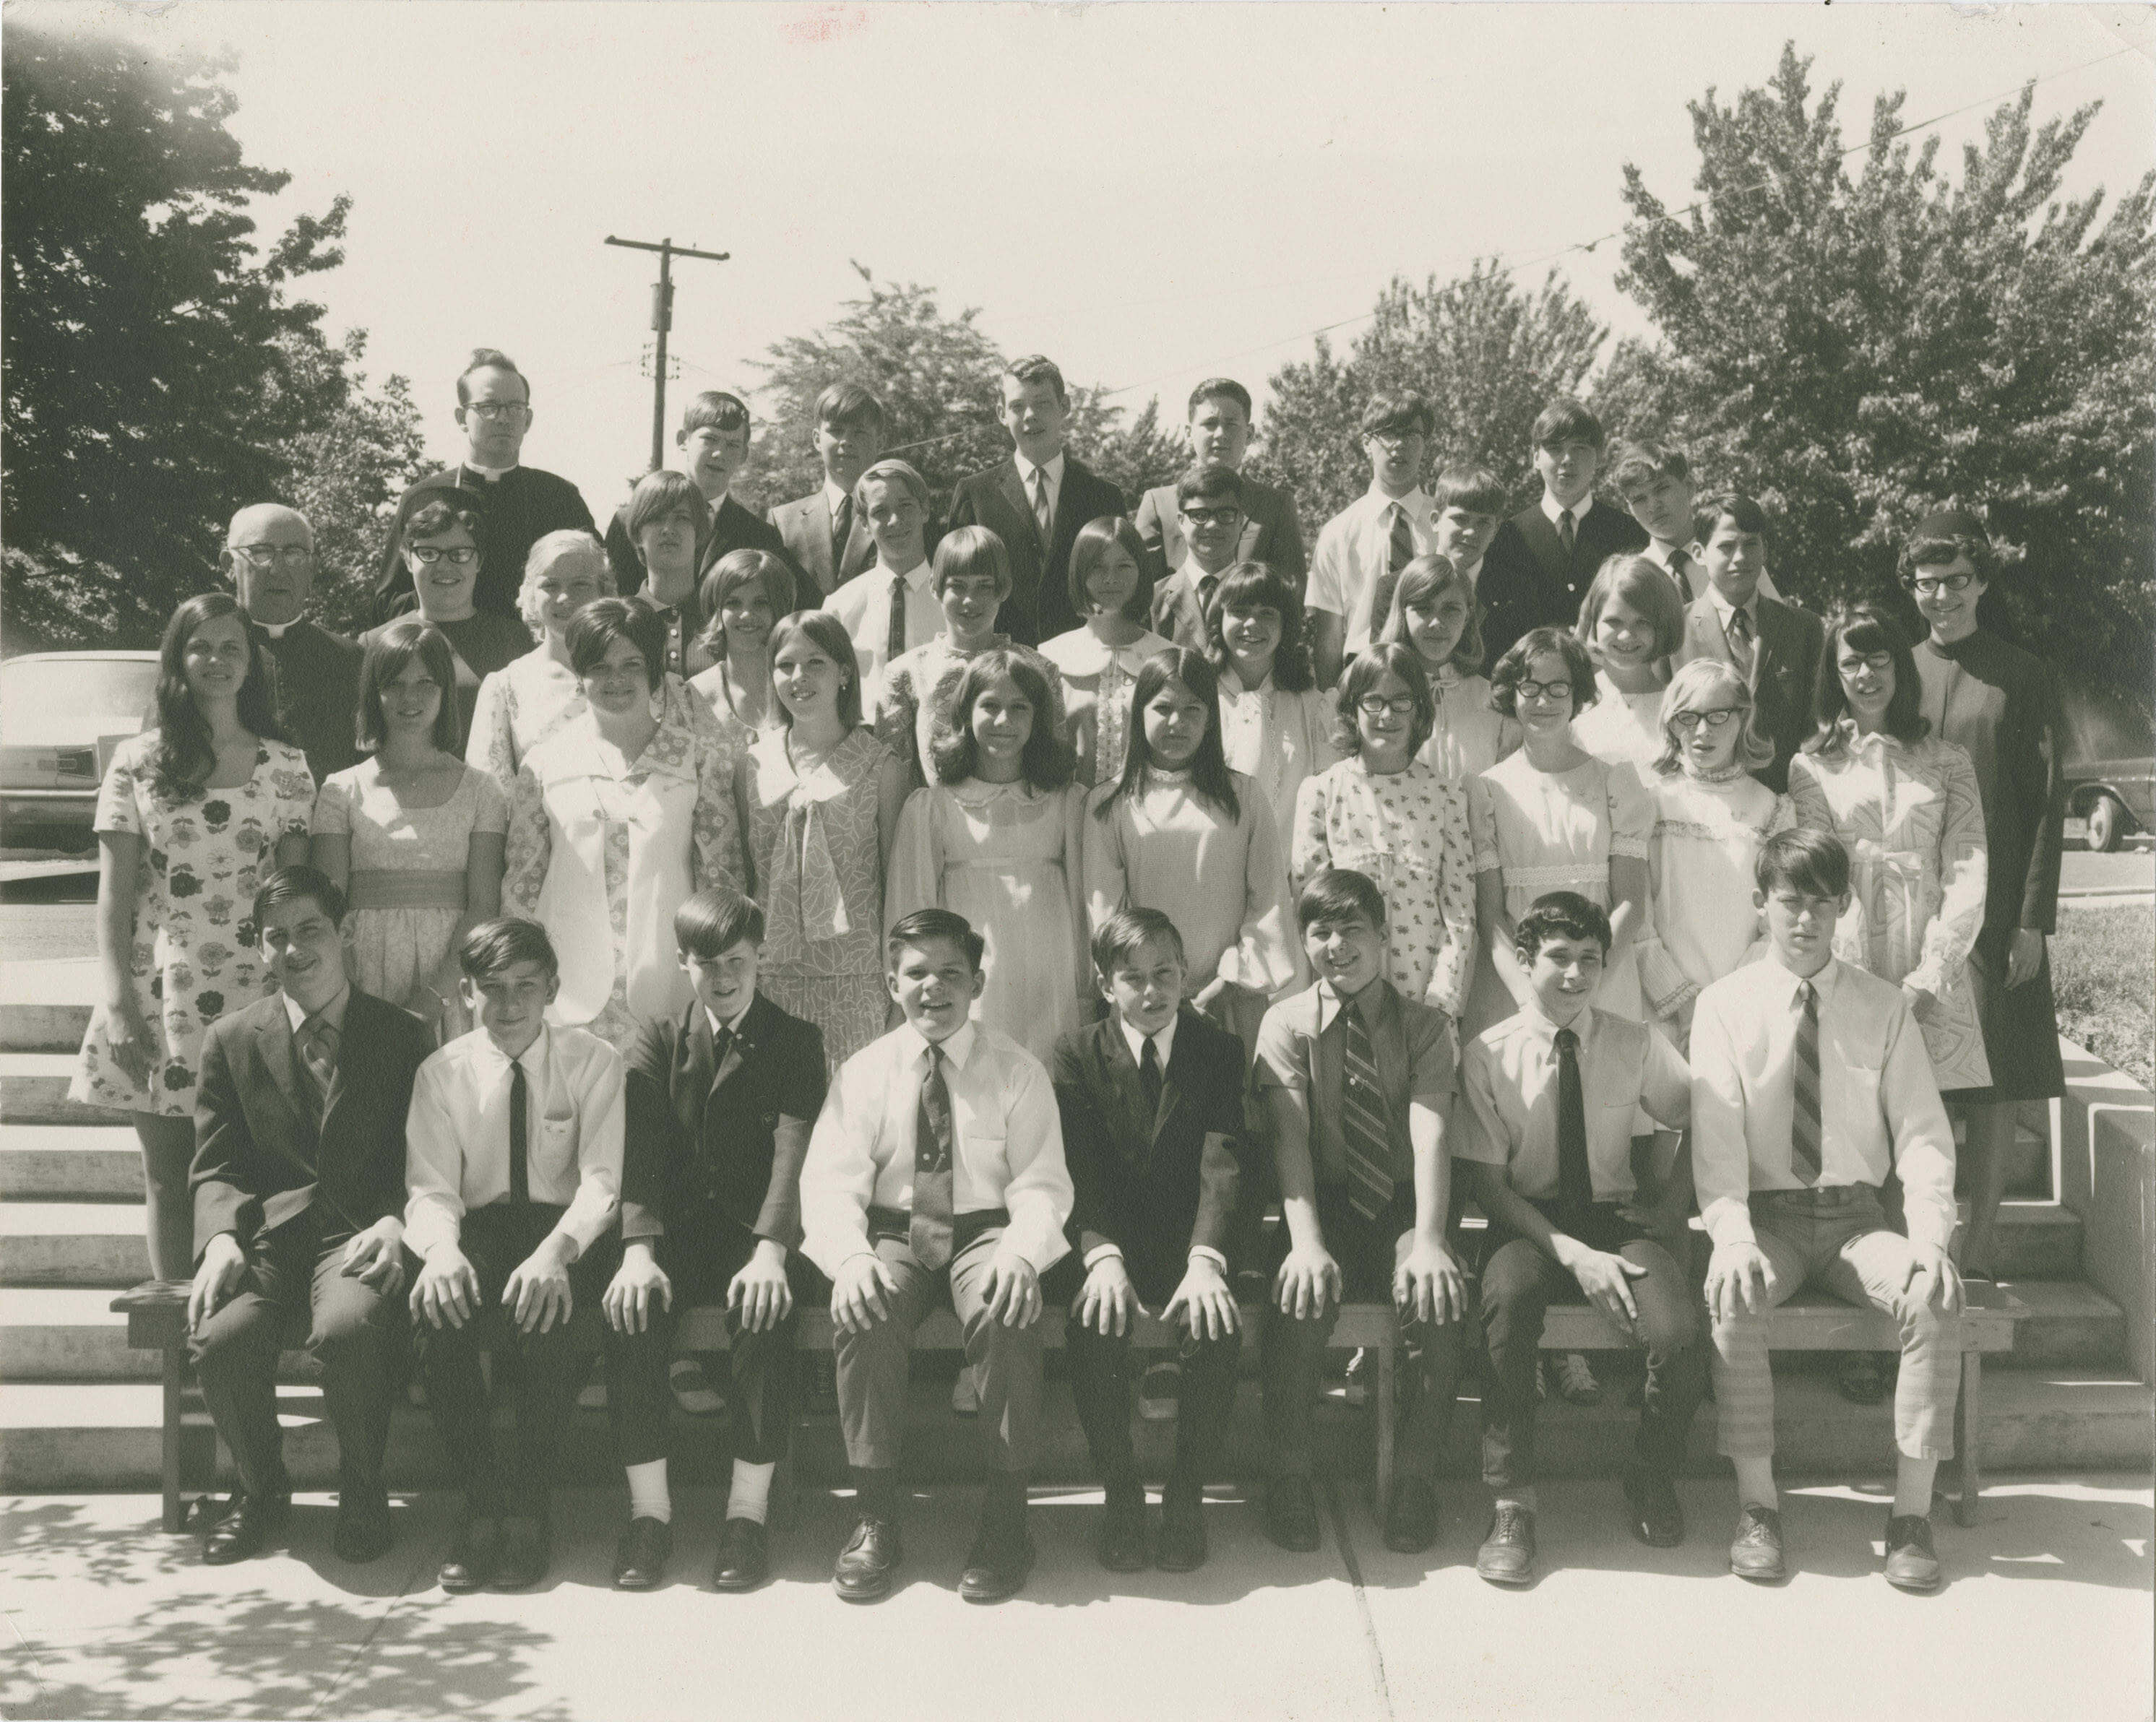 Holy_Family_School_Students_Clarkston_Washington_circa_19691970